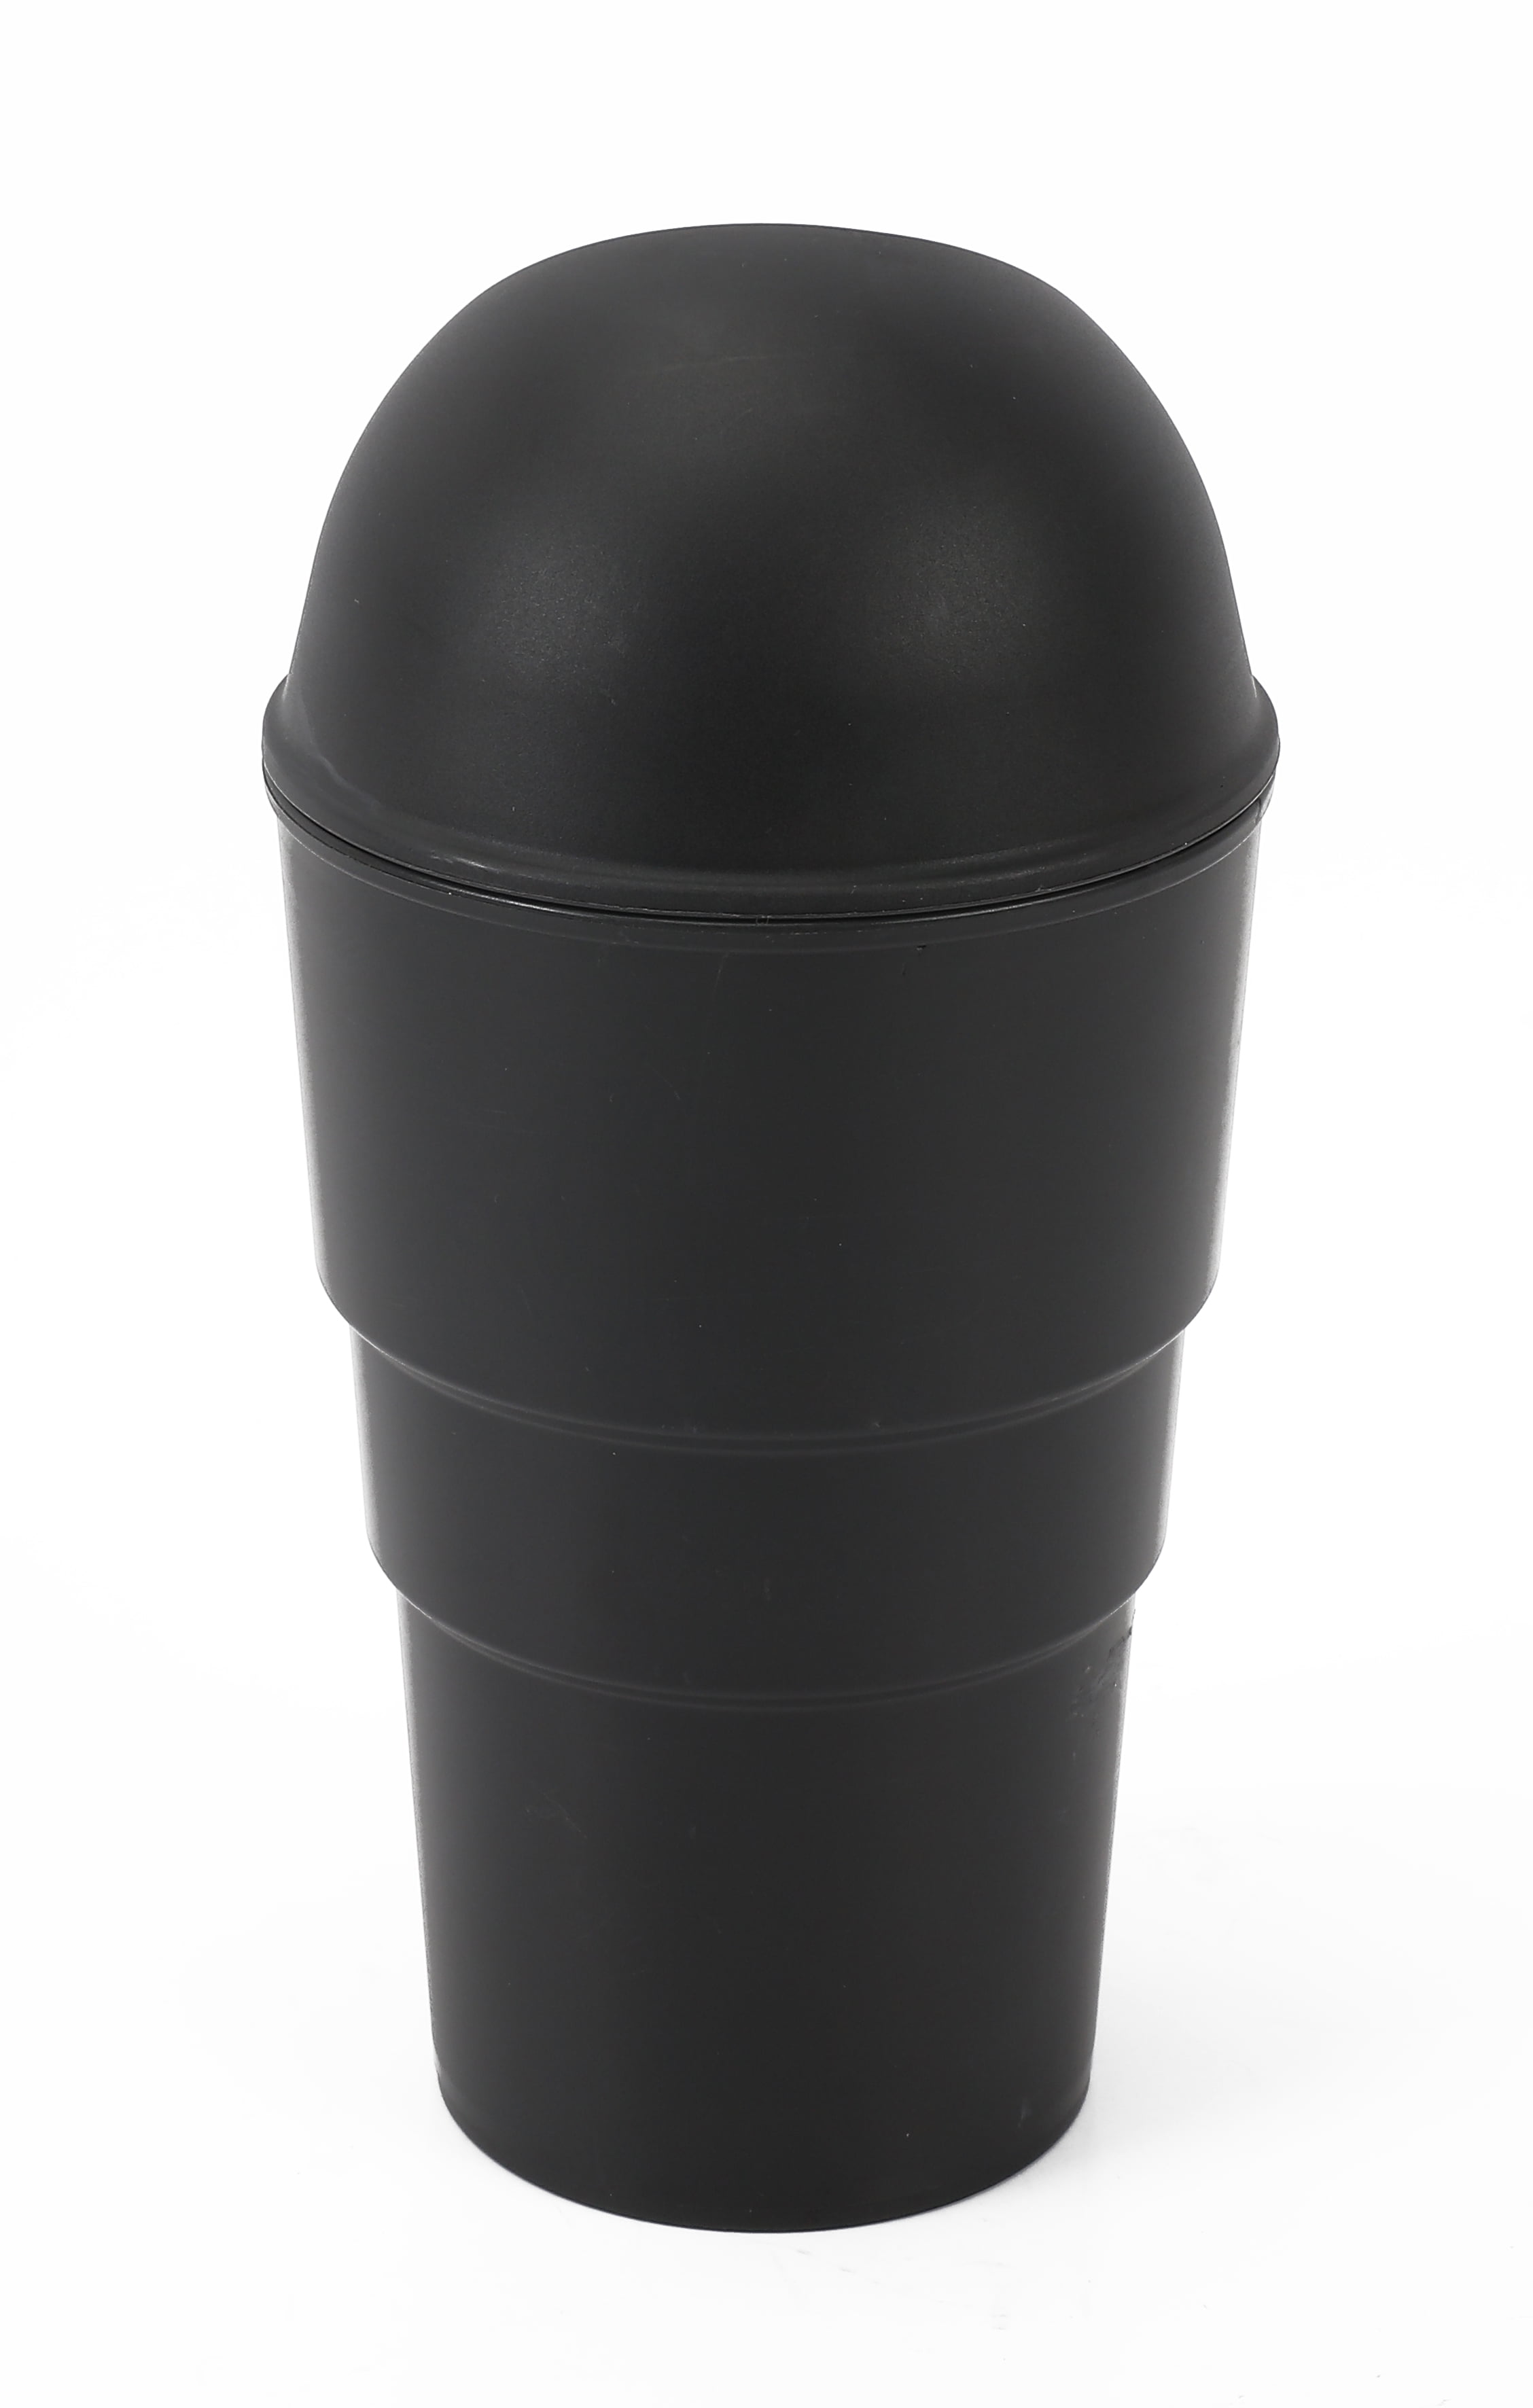 Auto Drive Cup Holder Trash Can, Black, Automotive Interior